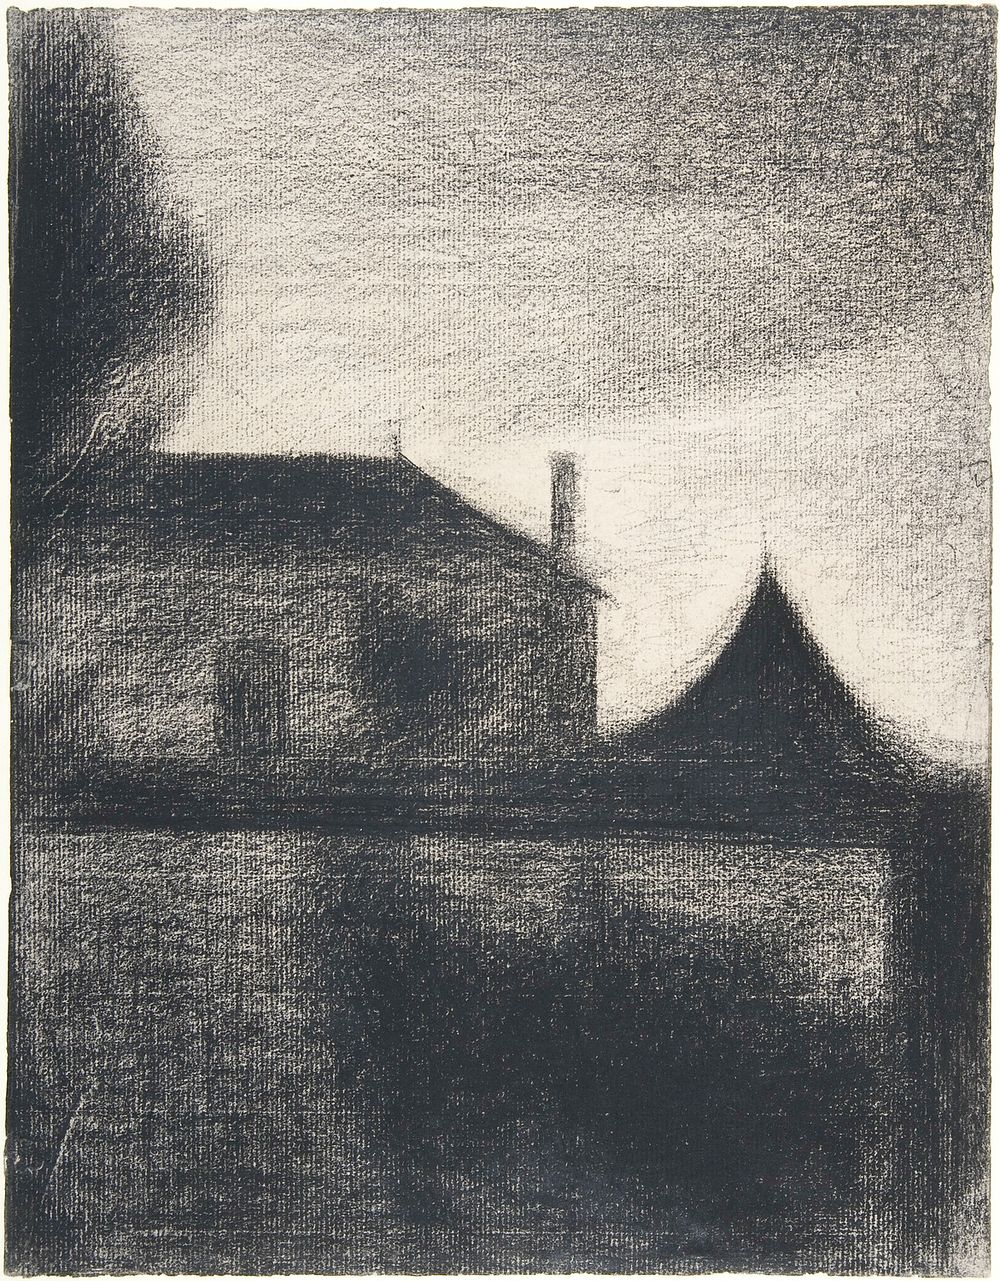 House at Dusk (La Cit&eacute;) (1886) by Georges Seurat. Original from The MET Museum. Digitally enhanced by rawpixel.